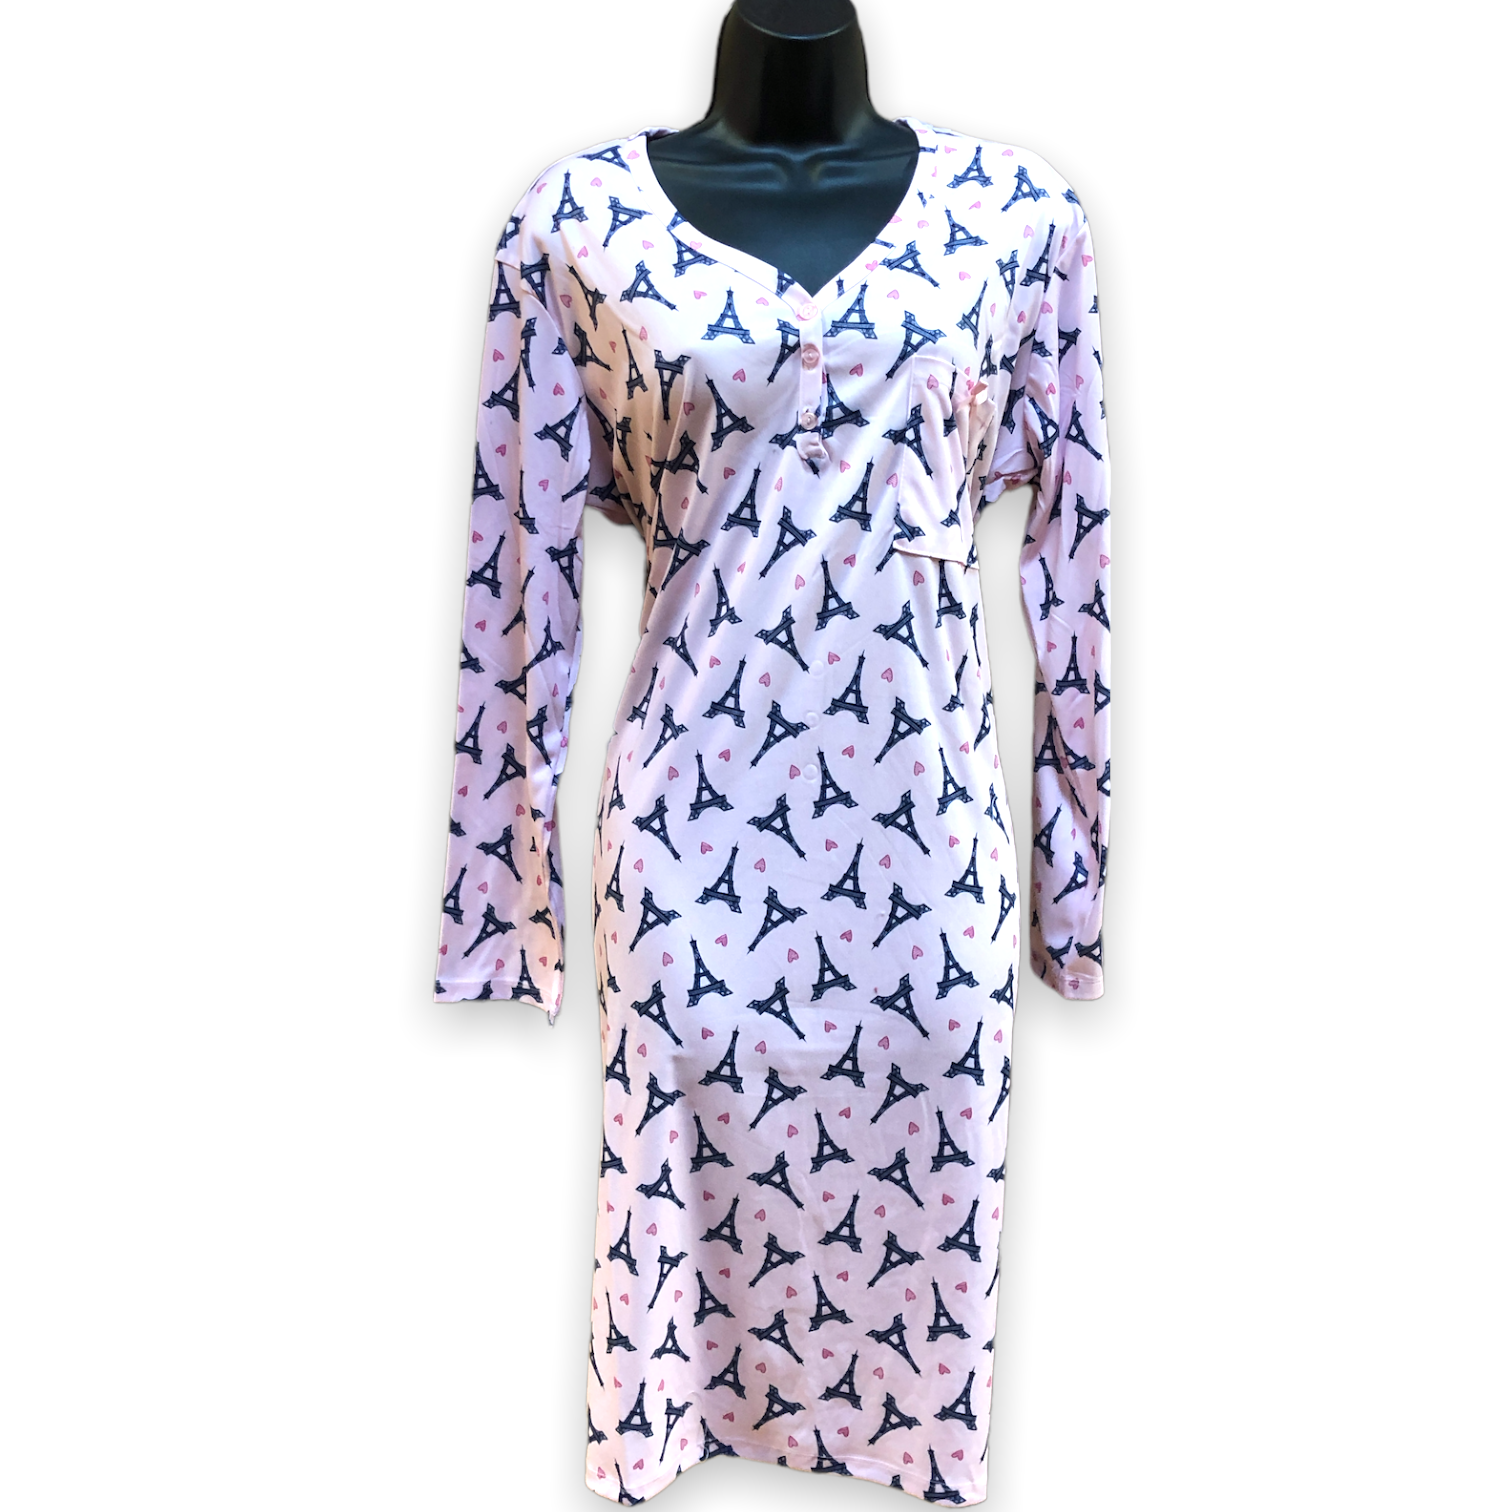 BULK BUY- Women's Polyester Long Sleeved Nightgowns